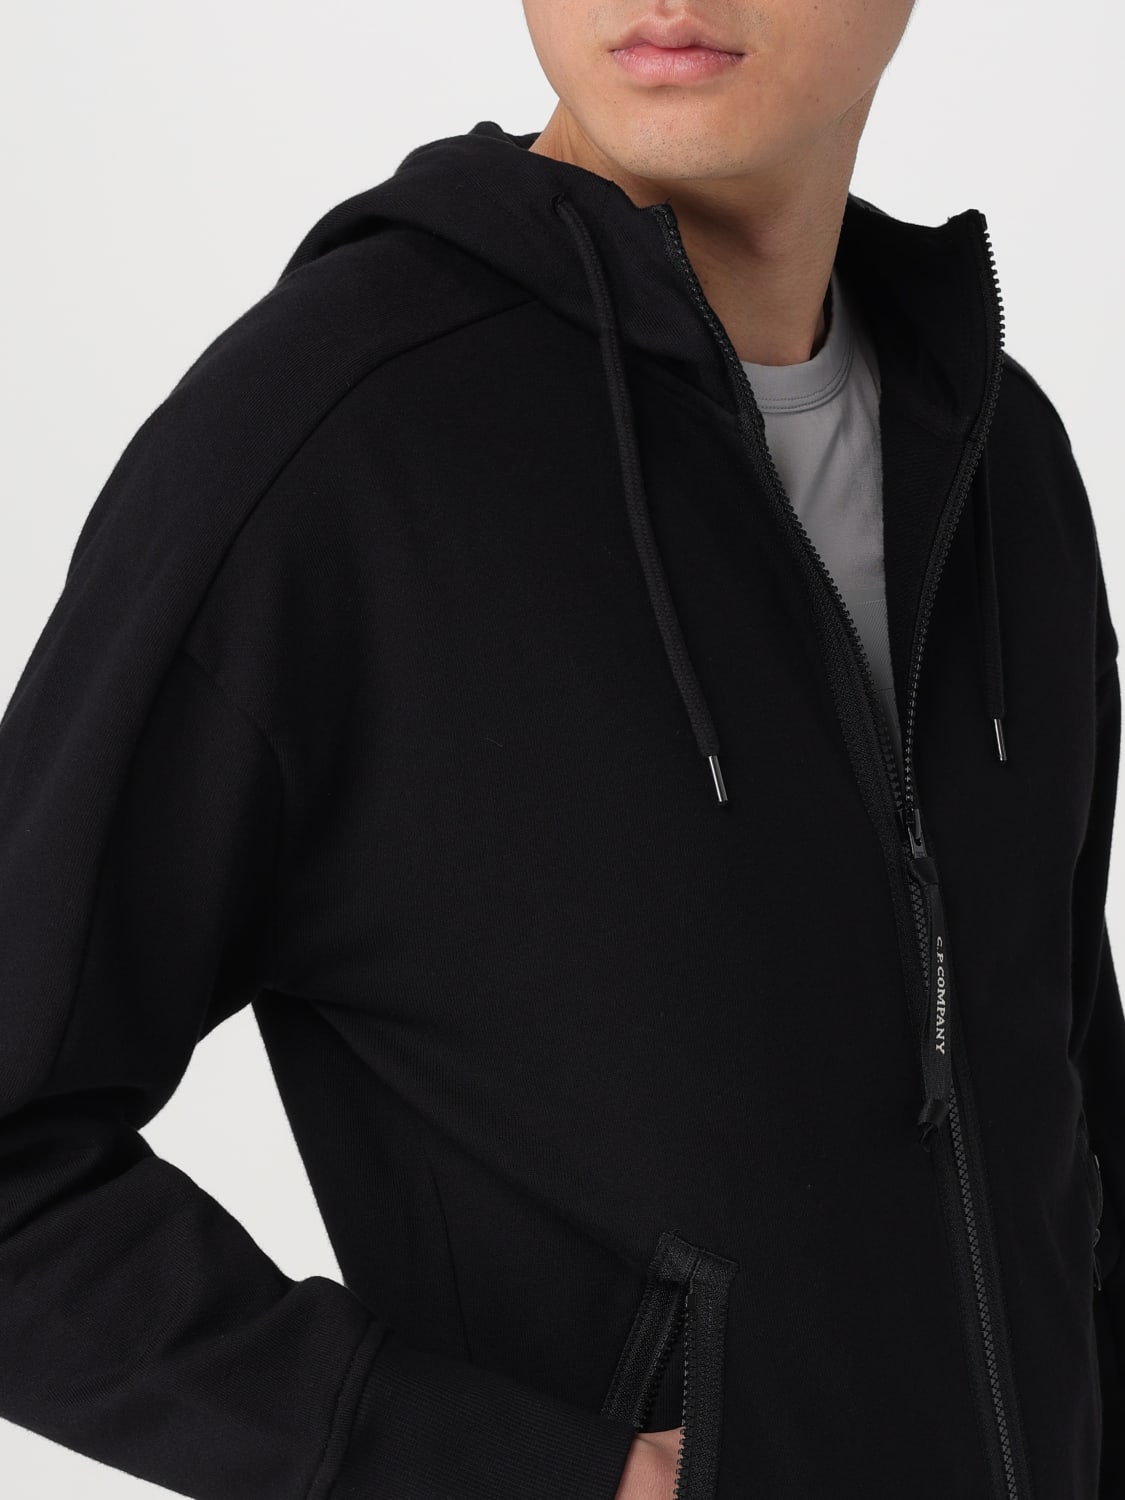 C.P. COMPANY Sweat jacket in black